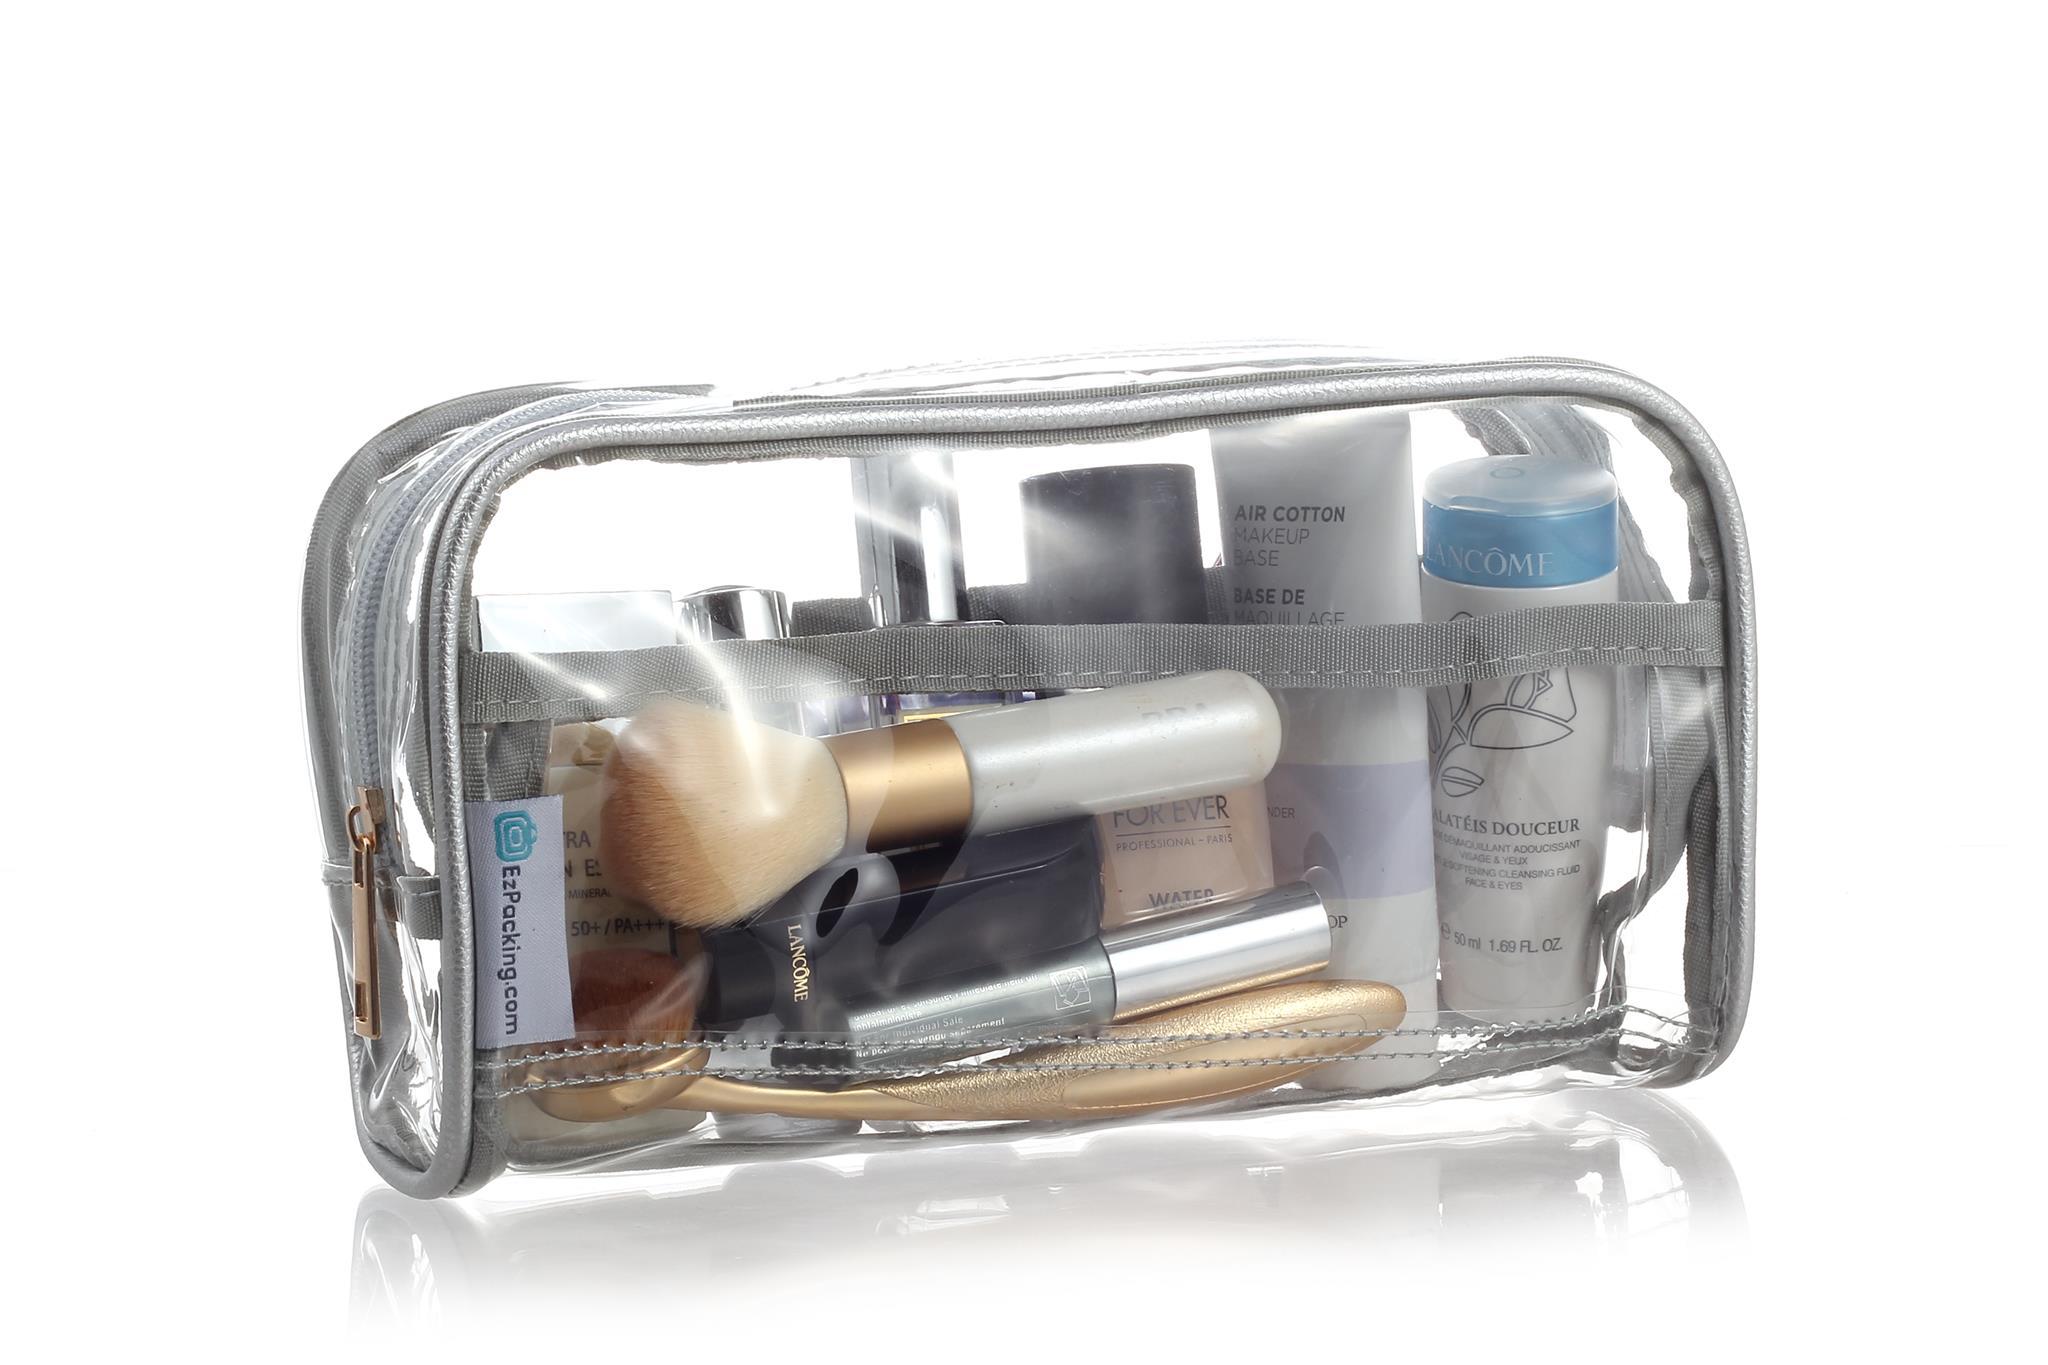 Travel makeup organizer bag with see through design